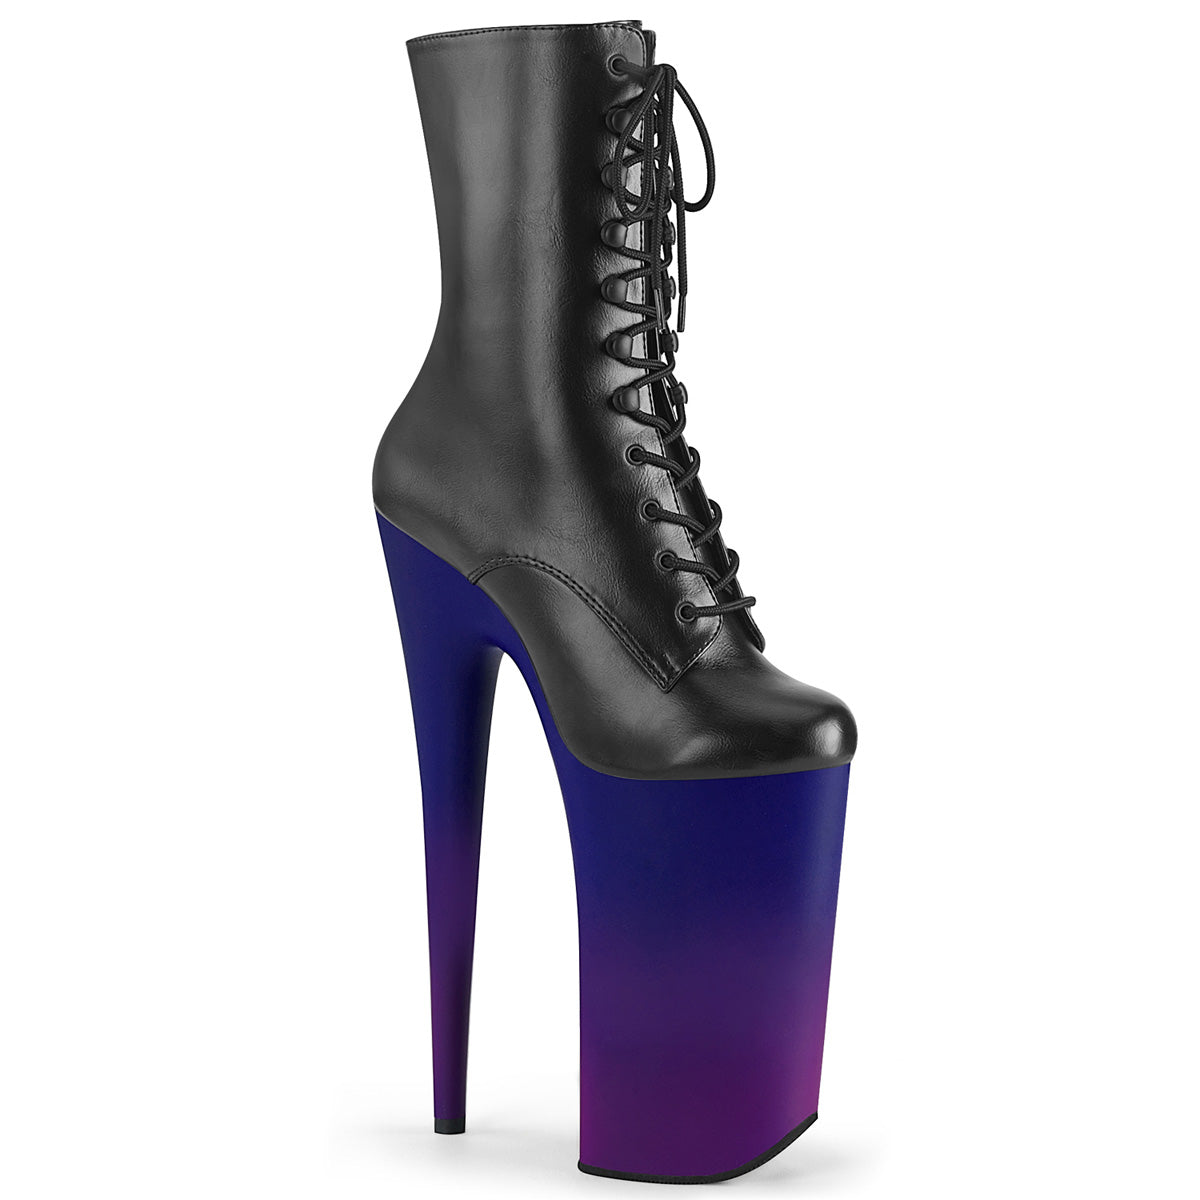 Pleaser Womens Ankle Boots BEYOND-1020BP Blk Faux Leather/Blue-Purple Ombre